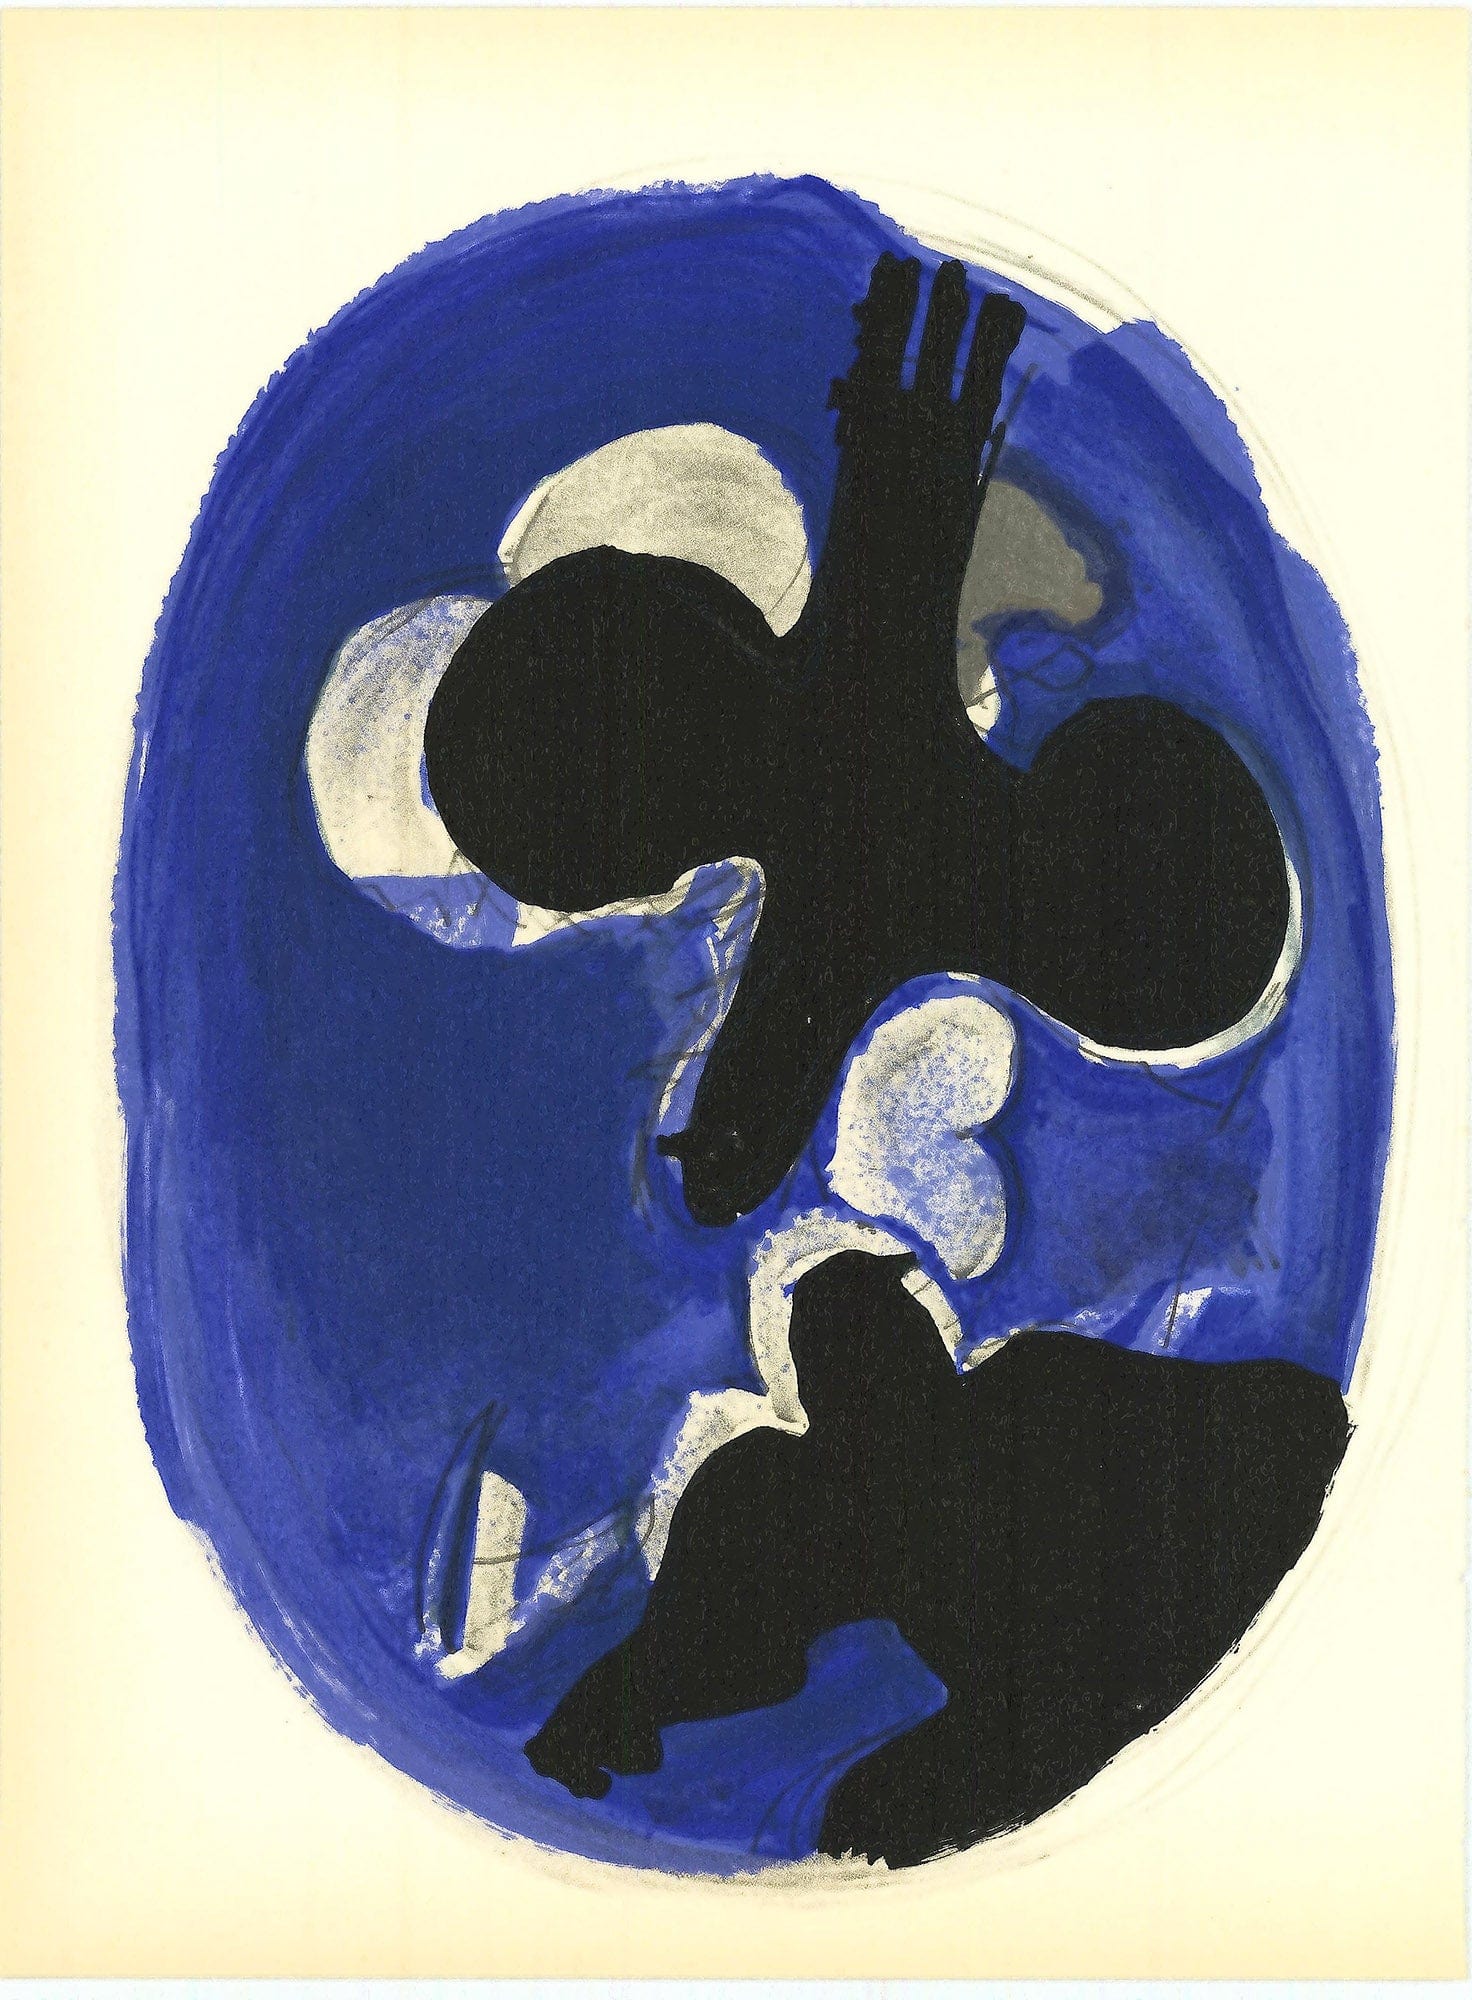 Georges Braque, "Untitled XII" ZOOM Vol. 8 No. 31 ET 32 verve lithograph